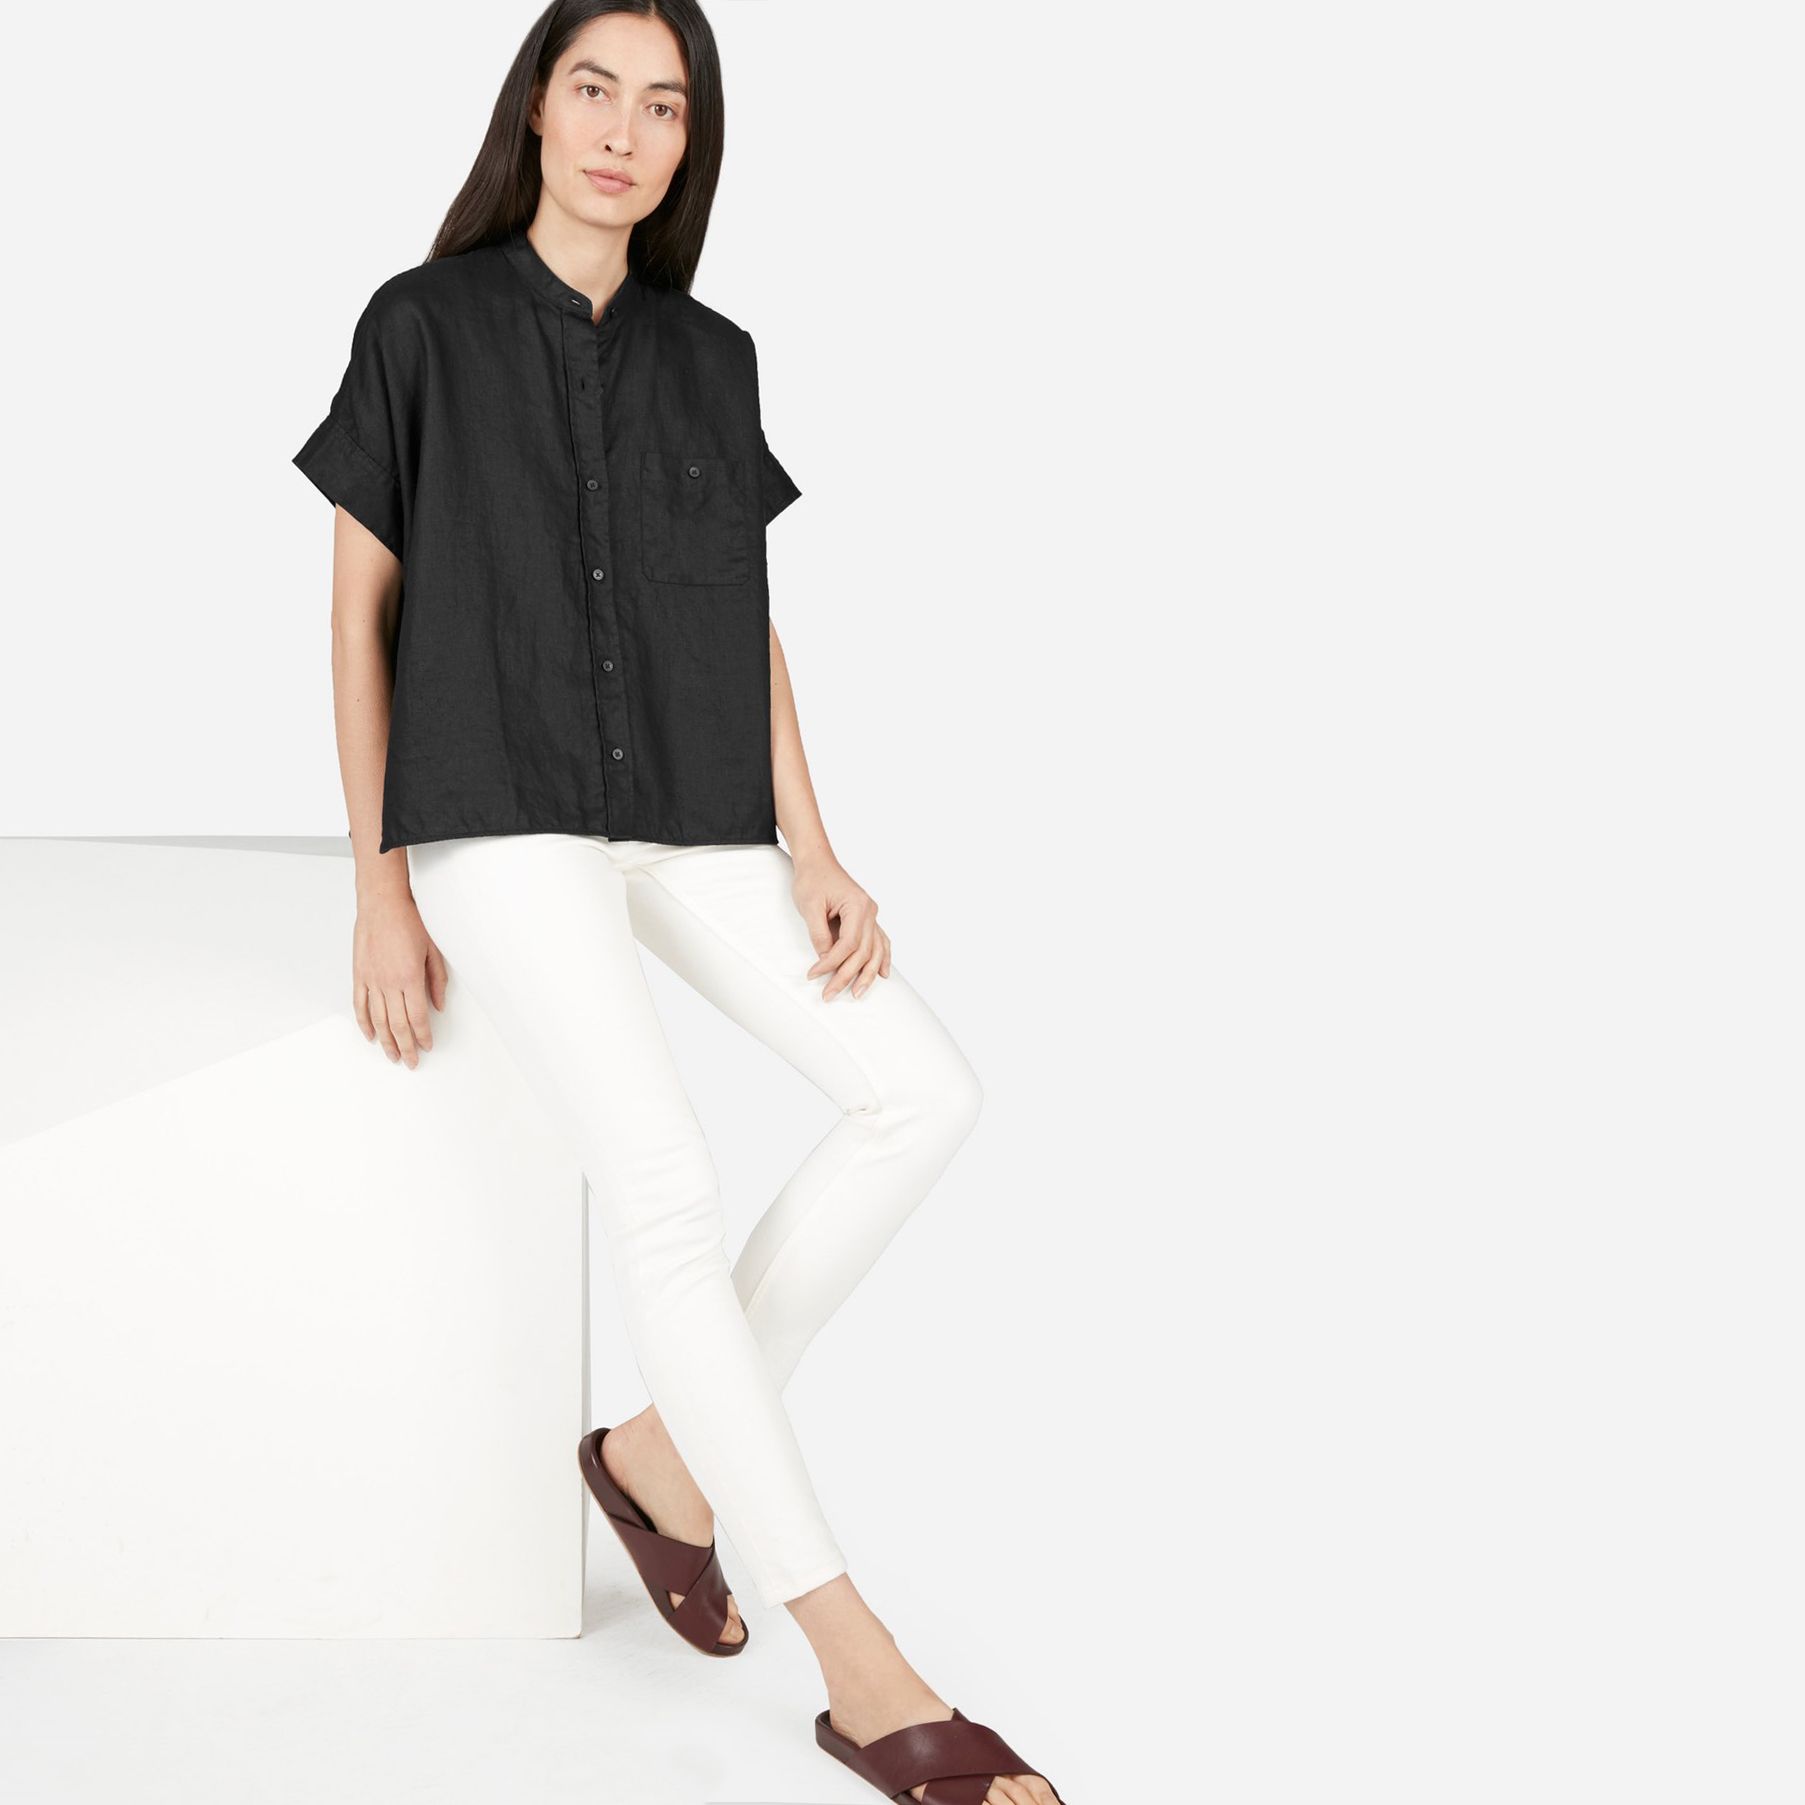 The Linen Collarless Square Shirt – $55 | Everlane